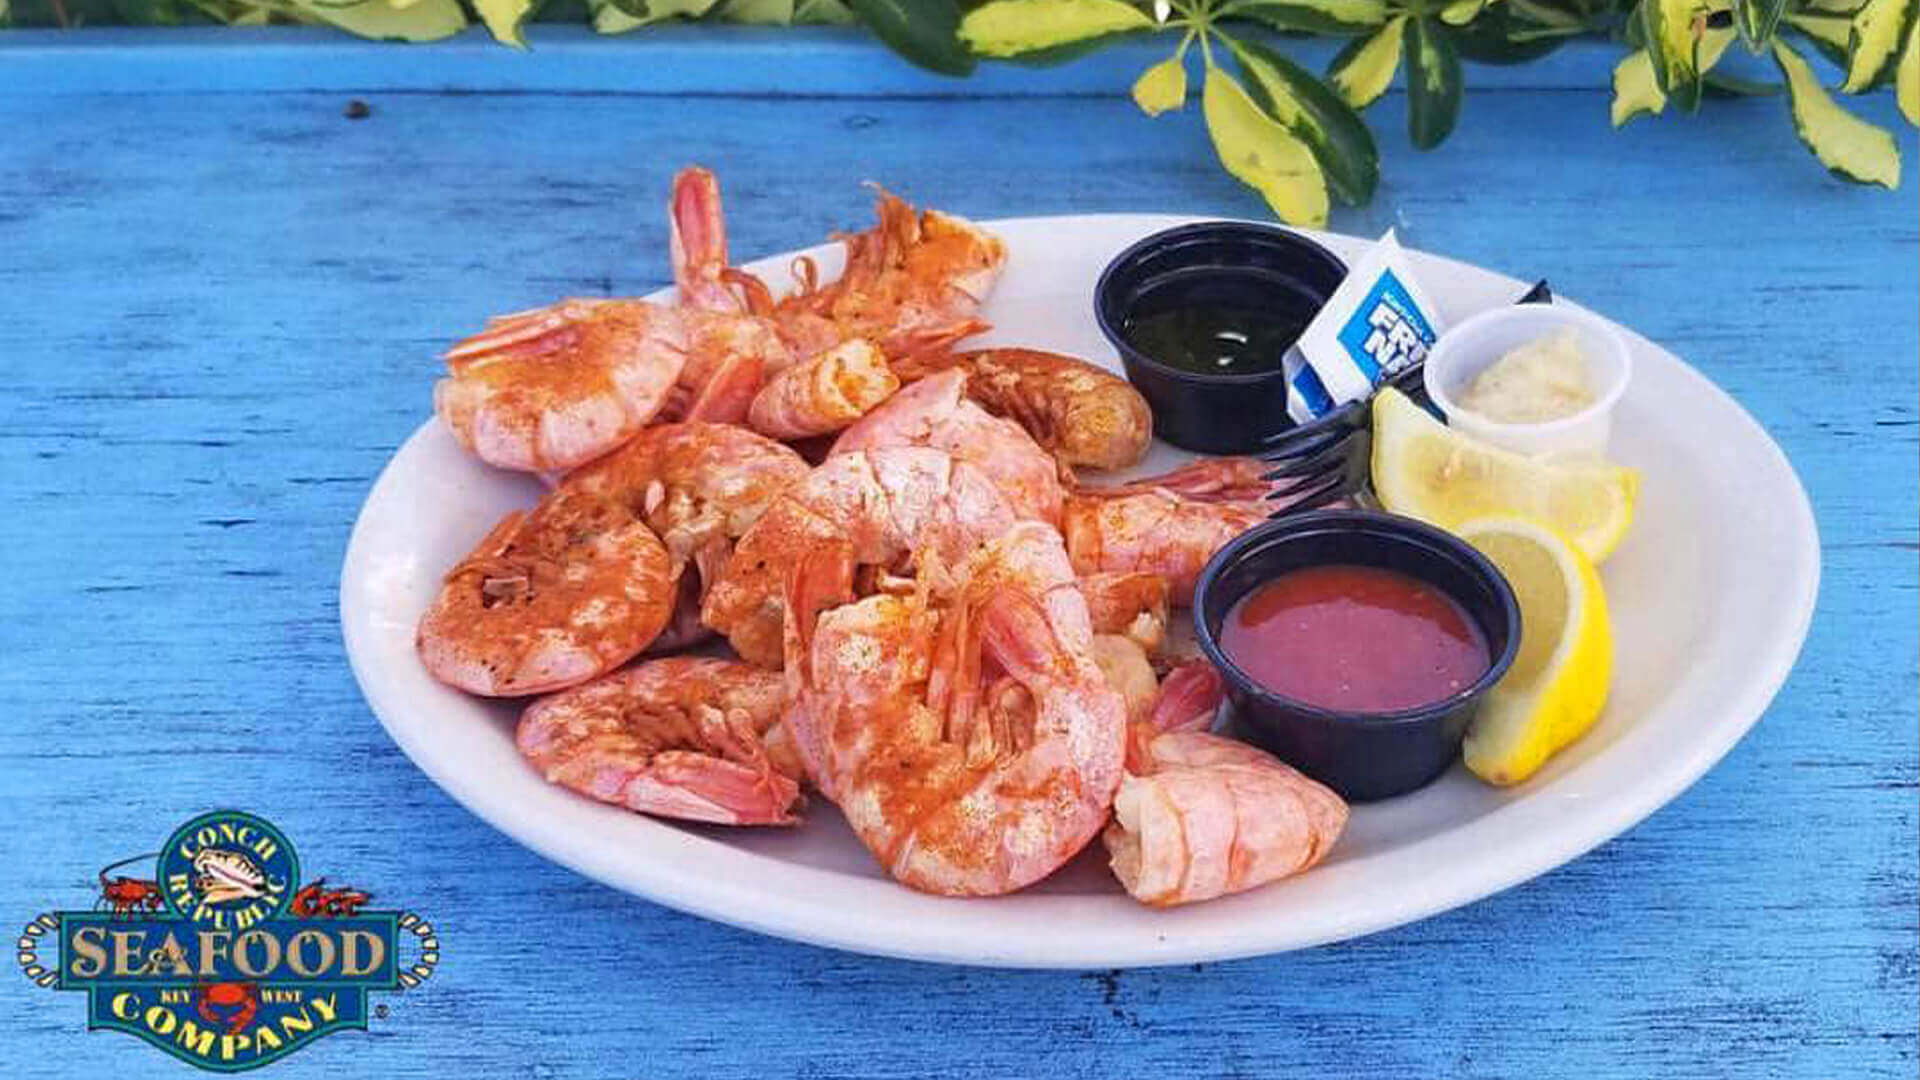 Conch Republic Seafood Company shrimp dish